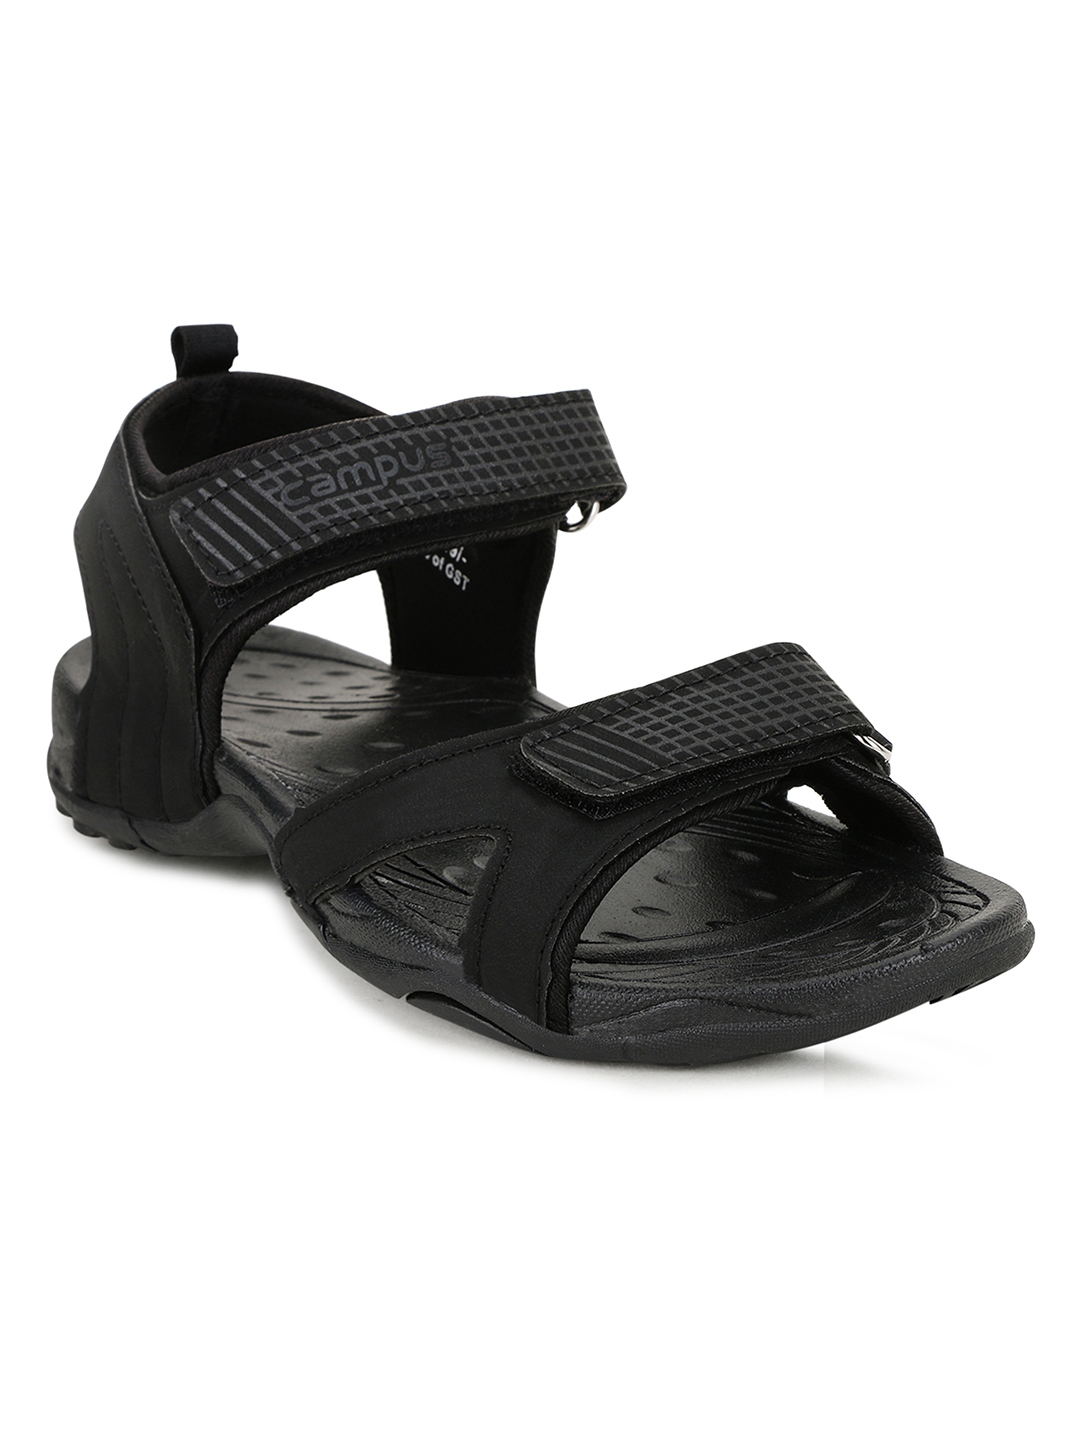 Campus Shoes | Black String-C Sandals